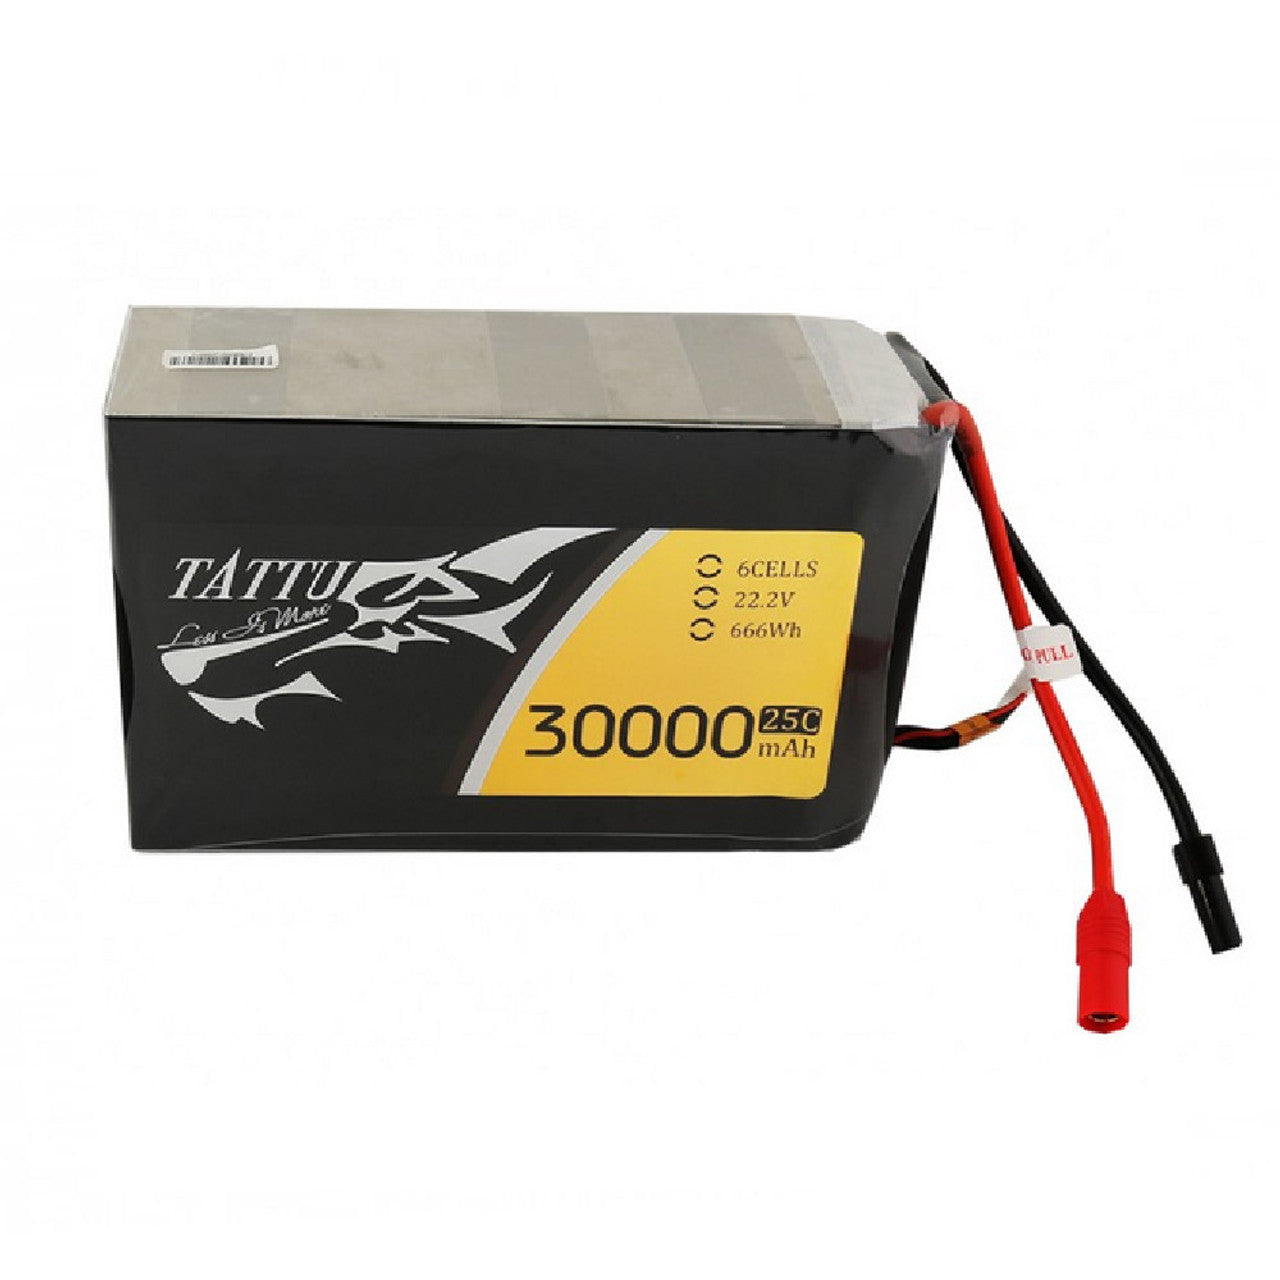 Tattu G-Tech 30000mAh 6S 22.2V 25C Lipo Battery Pack With AS150+XT150 Plug